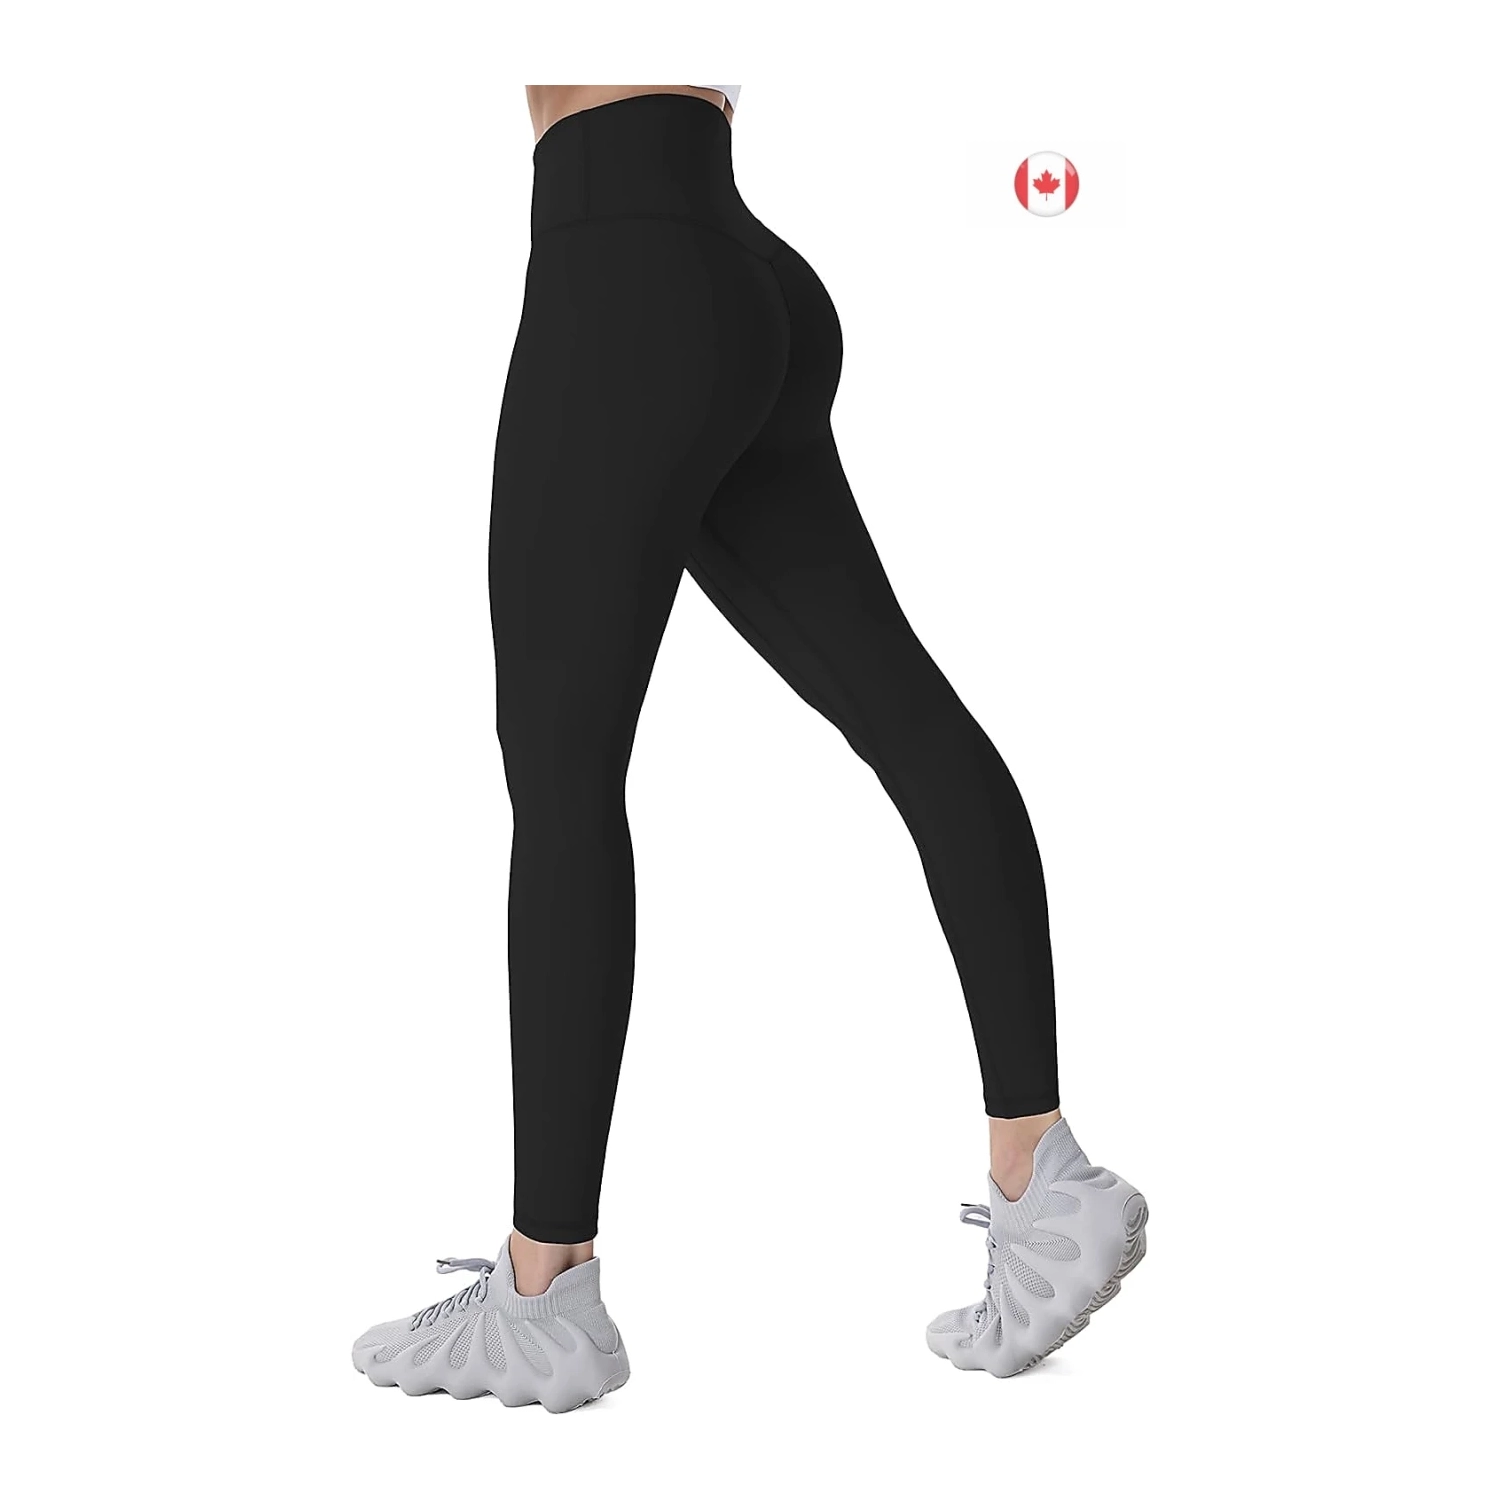 Sunzel Workout Leggings for Women, Squat Proof High Waisted Yoga